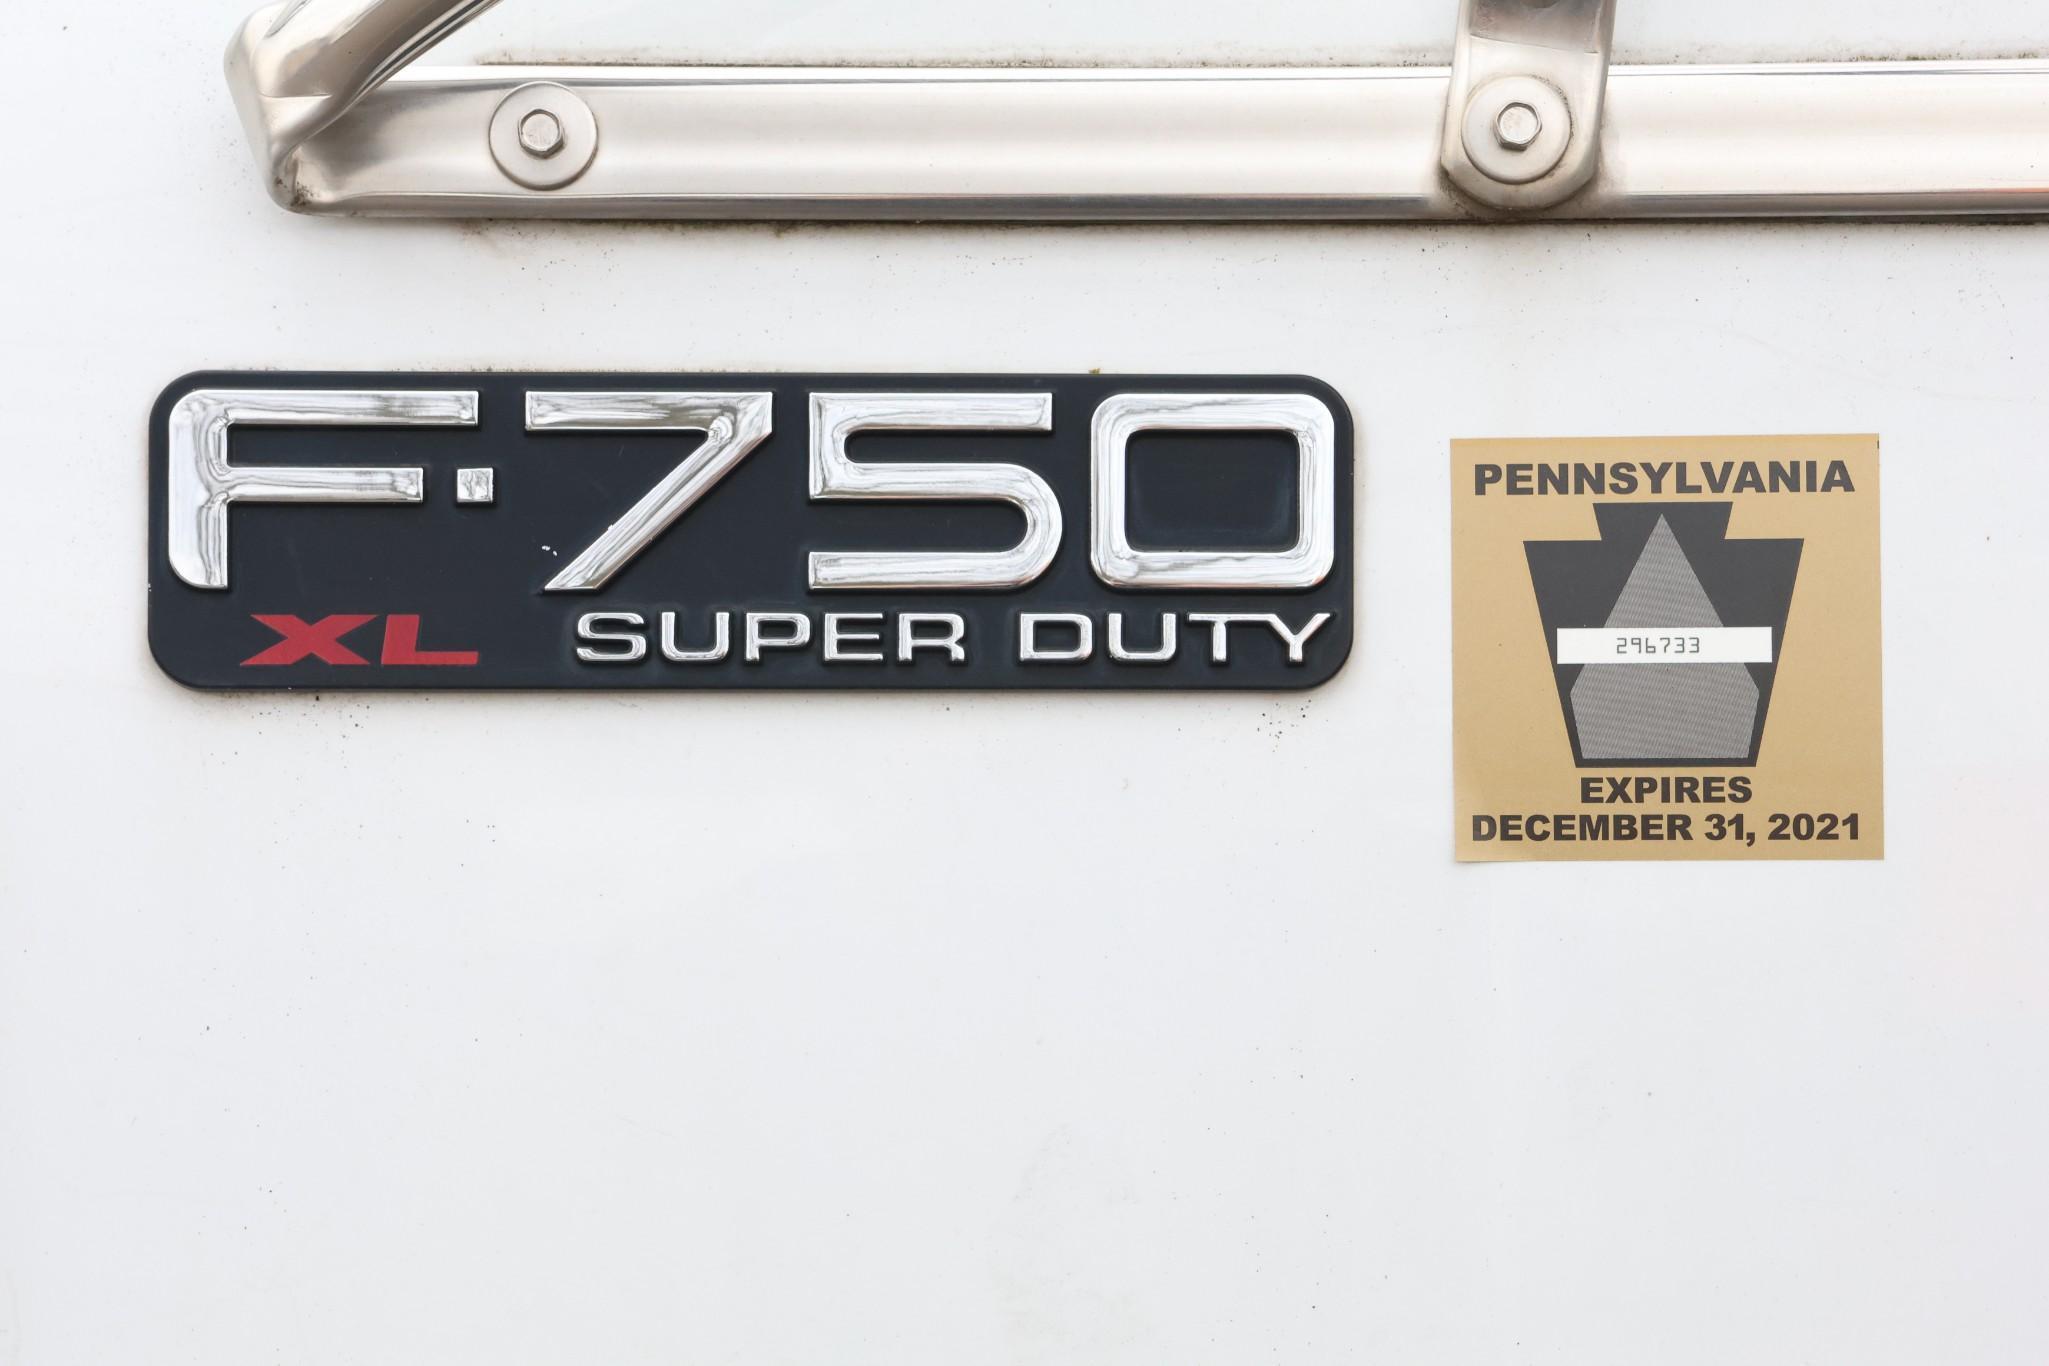 2015 Ford F-750 Dump Truck, VIN # 3FRNF7FC8FV688976